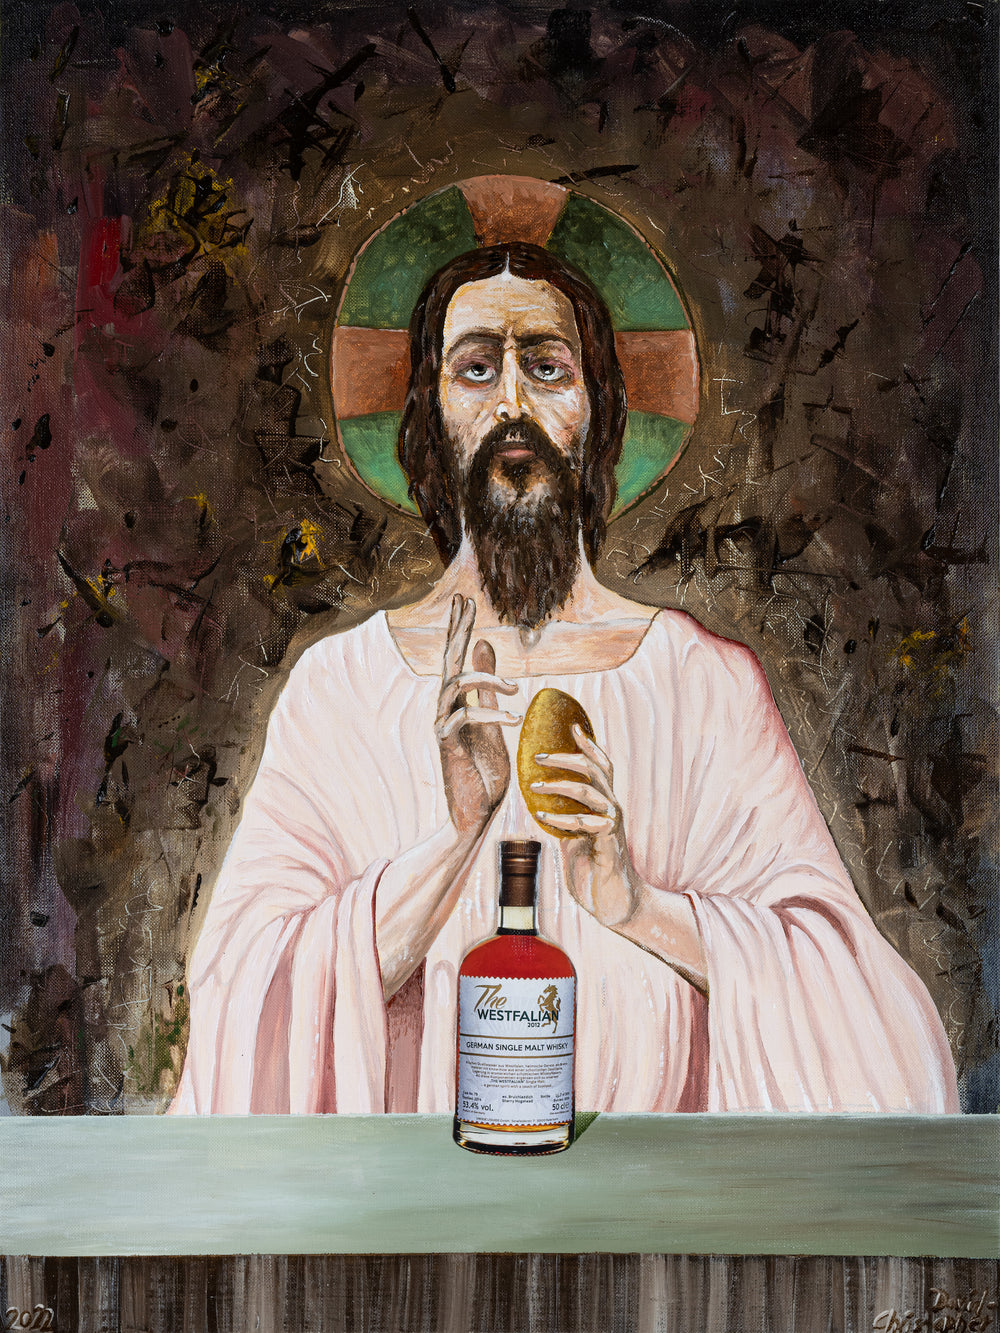 Jesus Loves You, and the Westfalian Whisky as well (ohne Schriftzug zum Westfalian Whisky)